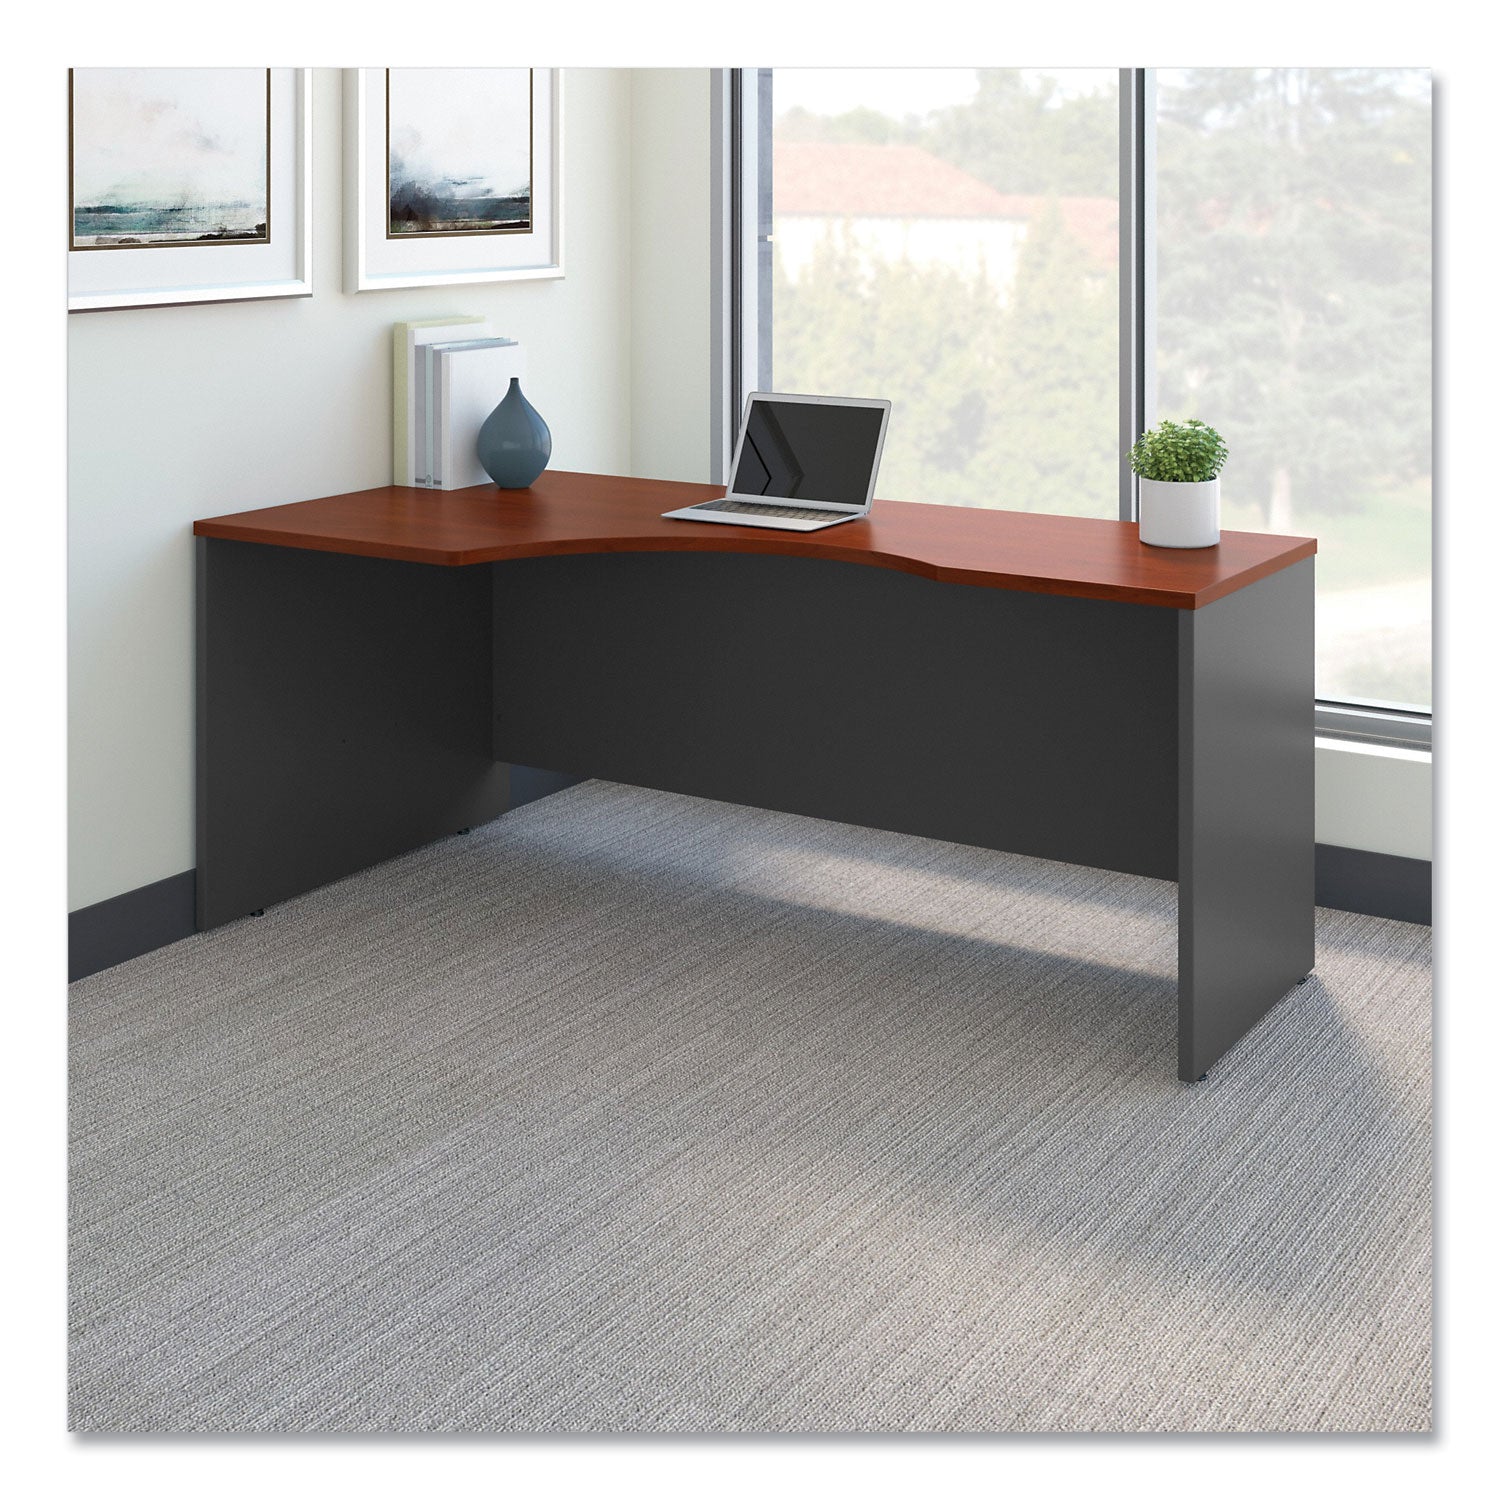 Series C Collection Left Corner Desk Module, 71.13" x 35.5" x 29.88", Hansen Cherry/Graphite Gray - 